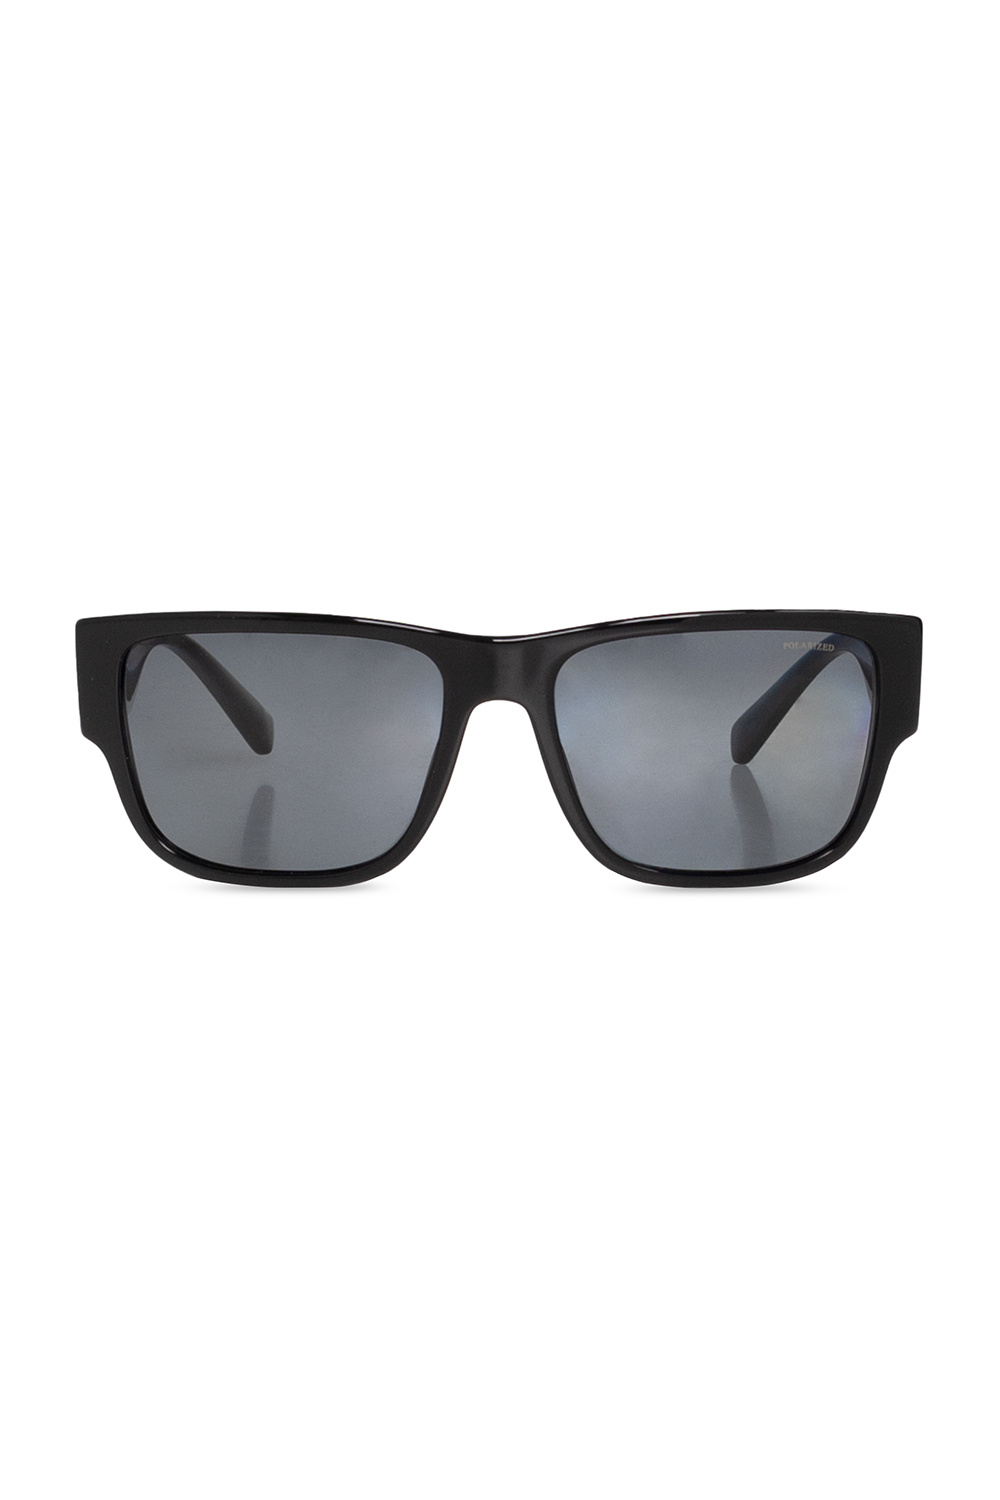 Versace Dior Eyewear Sostellaire sunglasses